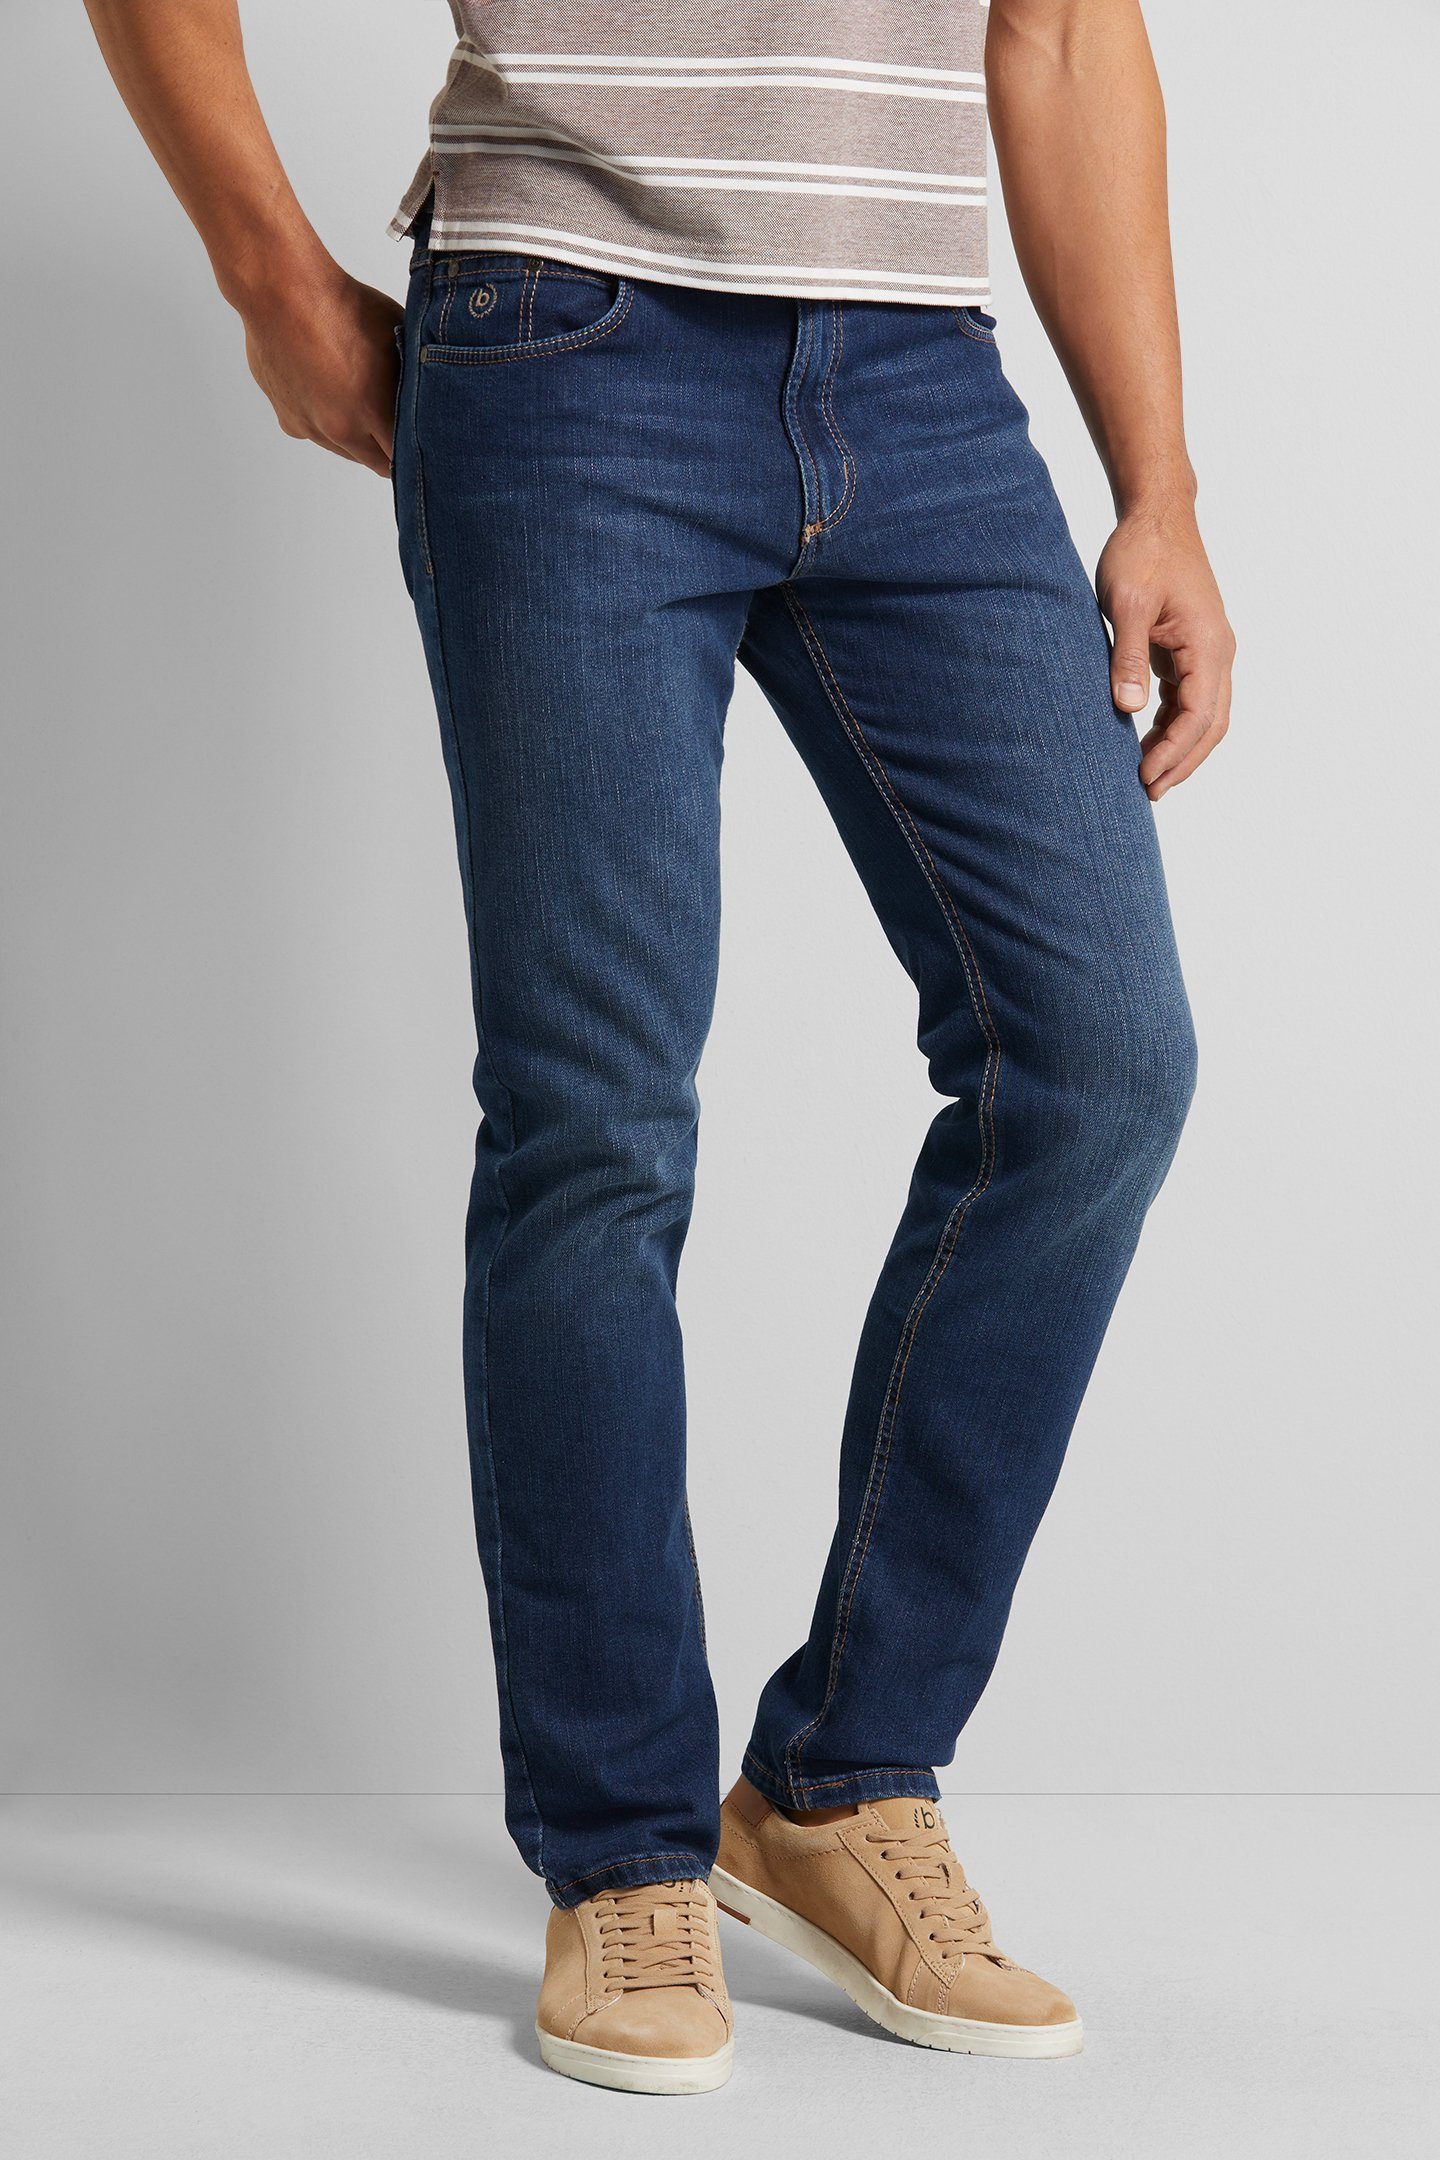 bugatti 5-Pocket-Jeans mit Comfort Stretch blau stone